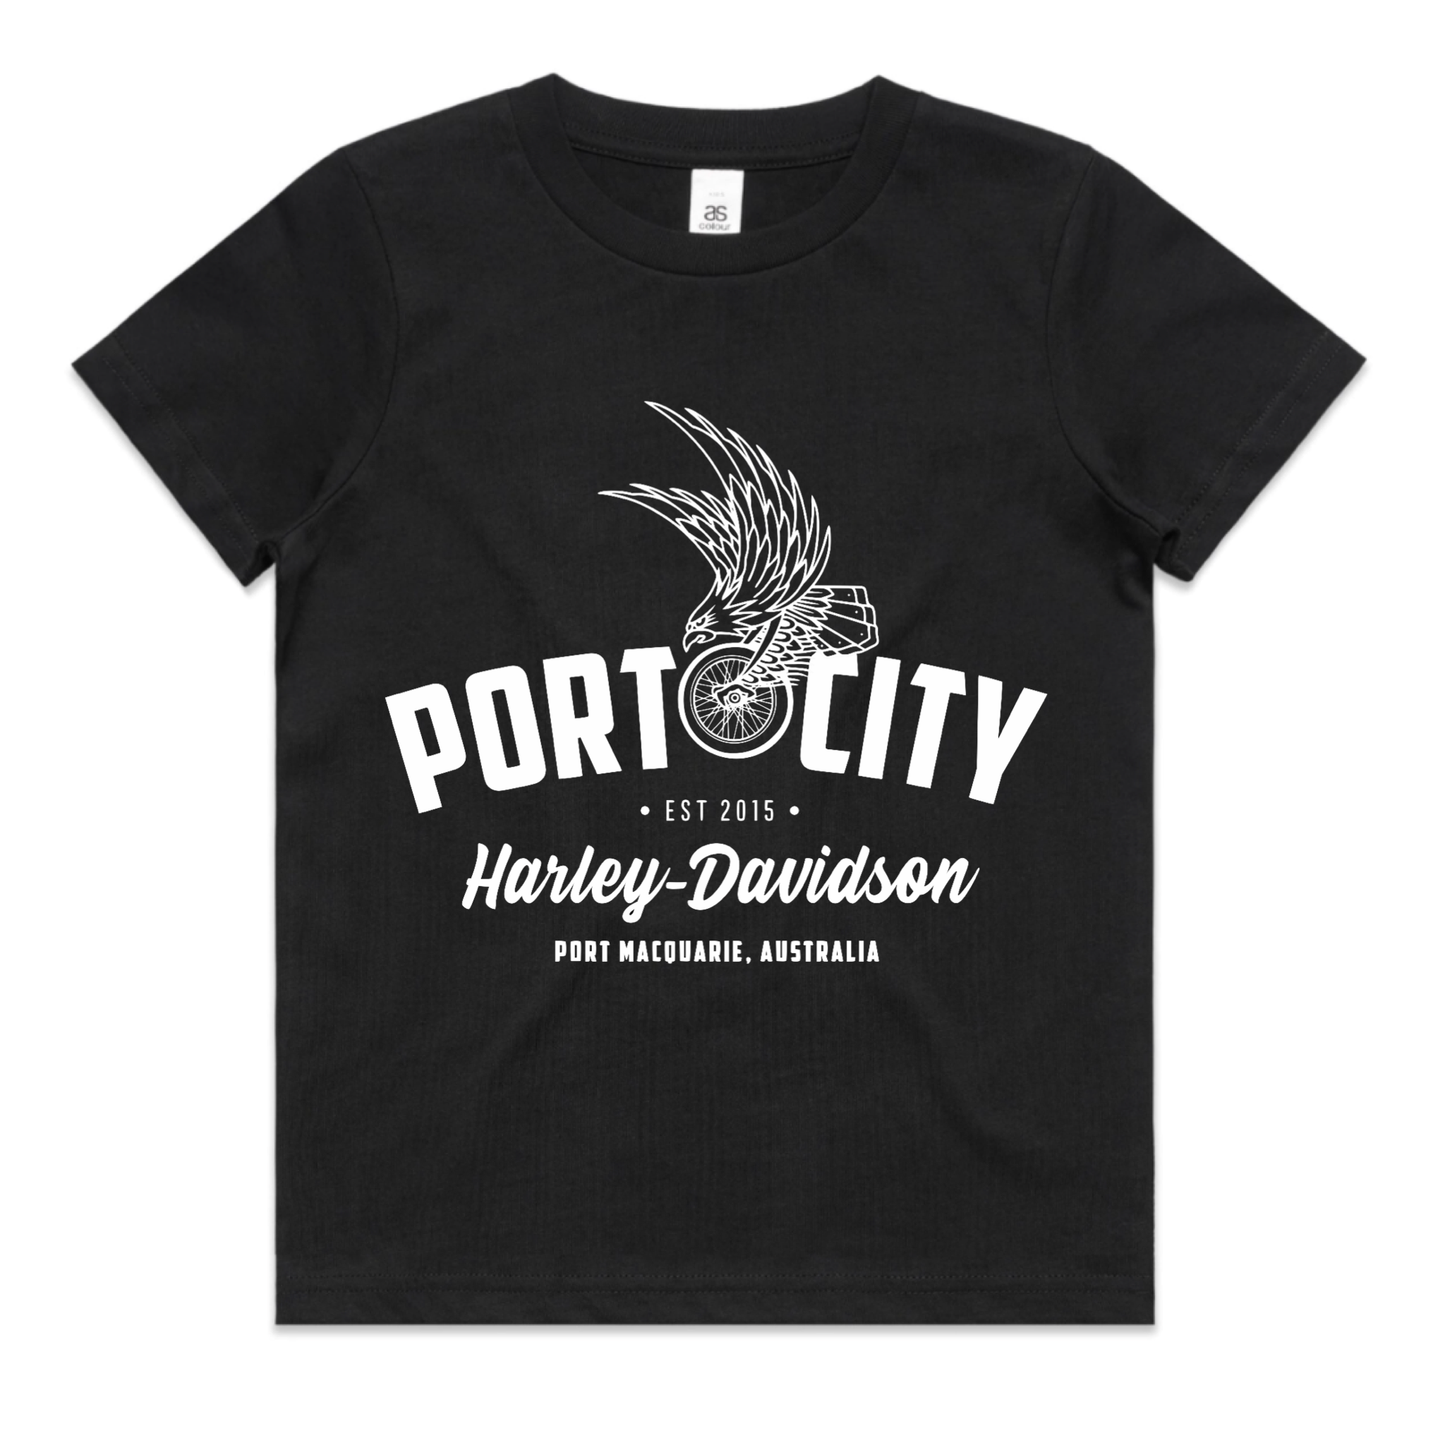 Kids / Youth Port City Harley-Davidson Eagle Wing T-Shirt - BLACK - Sizes 2-14 (NEW)